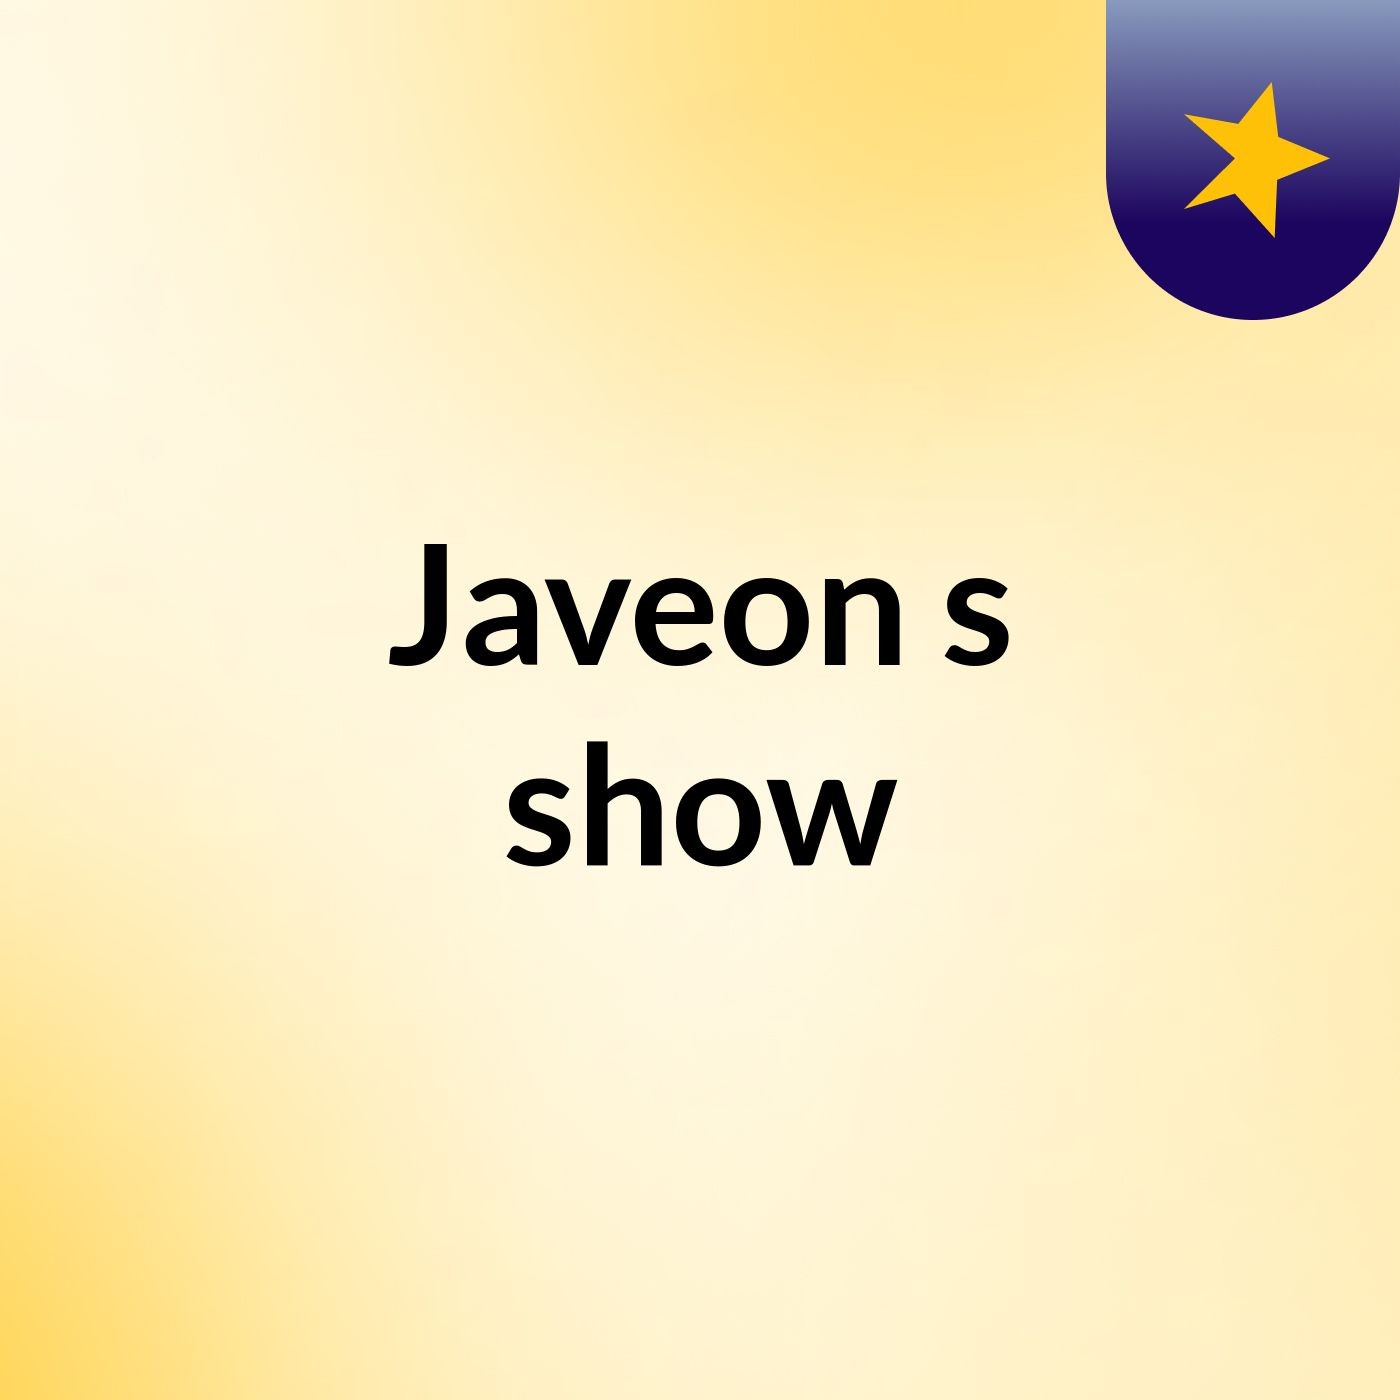 Javeon's show